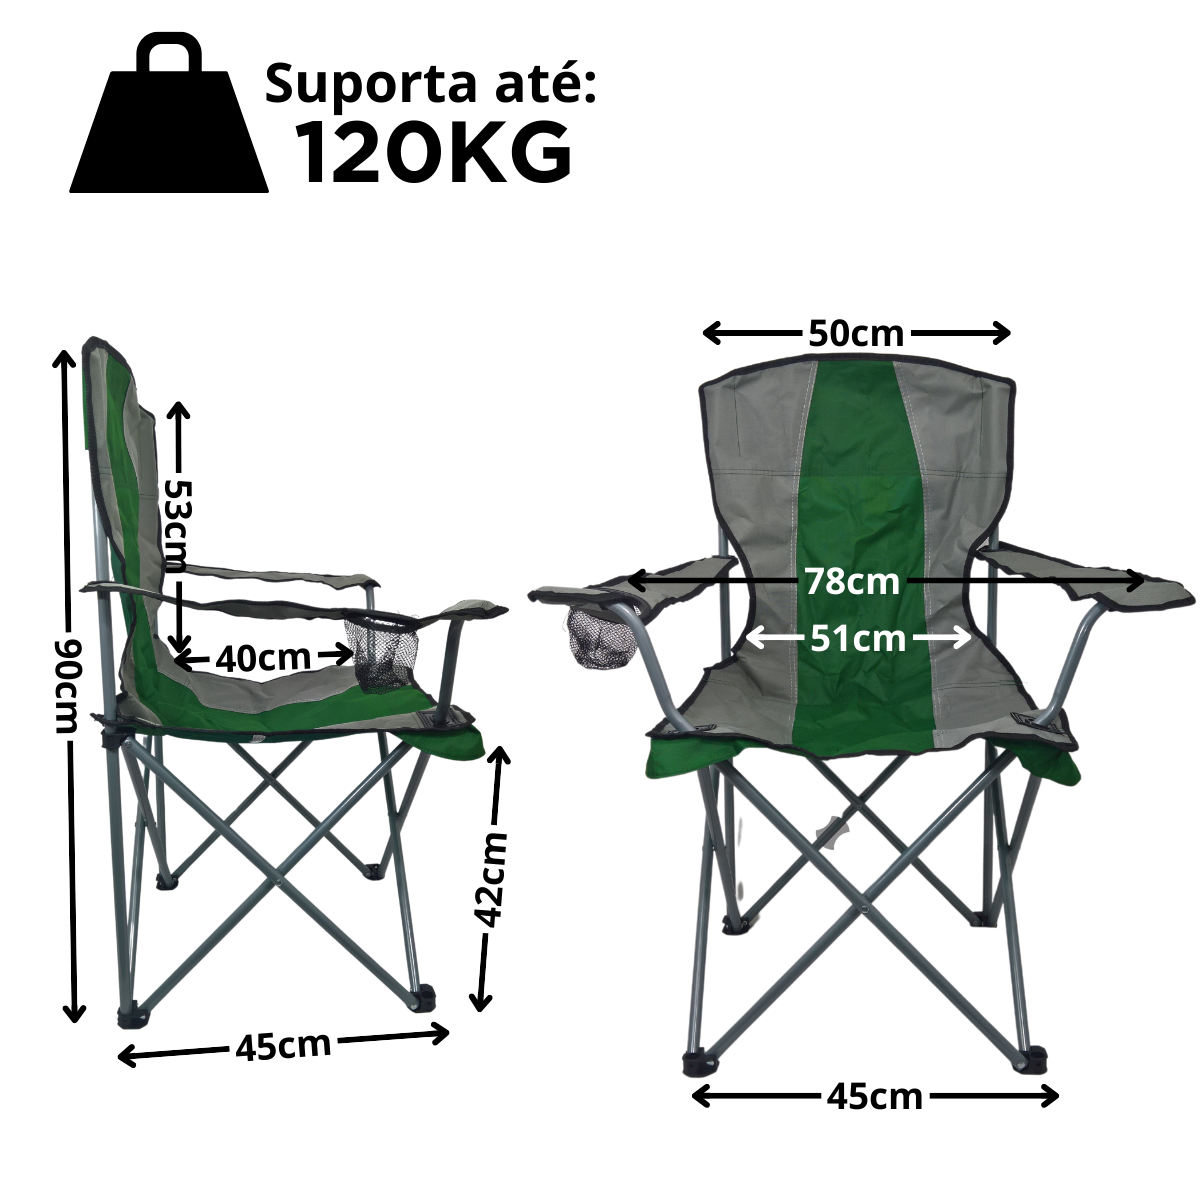 Cadeira para Camping Dobravel Portatil Voyager 120kg Vde/cza Lu0097_vd - 5